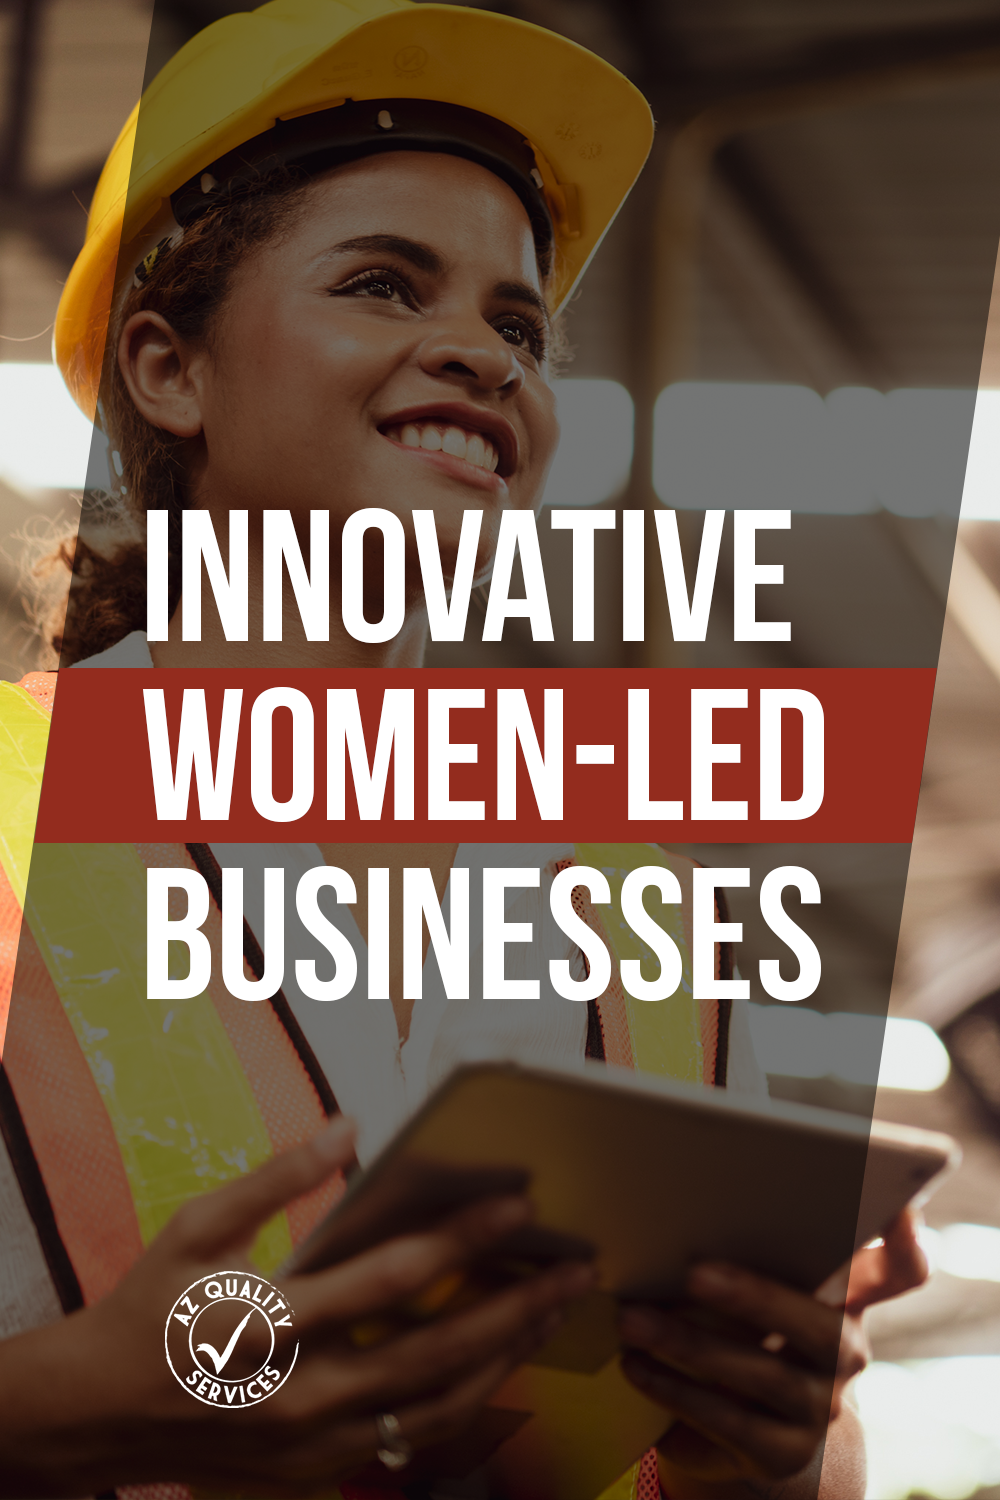 graphic for innovative women-led businesses blog post